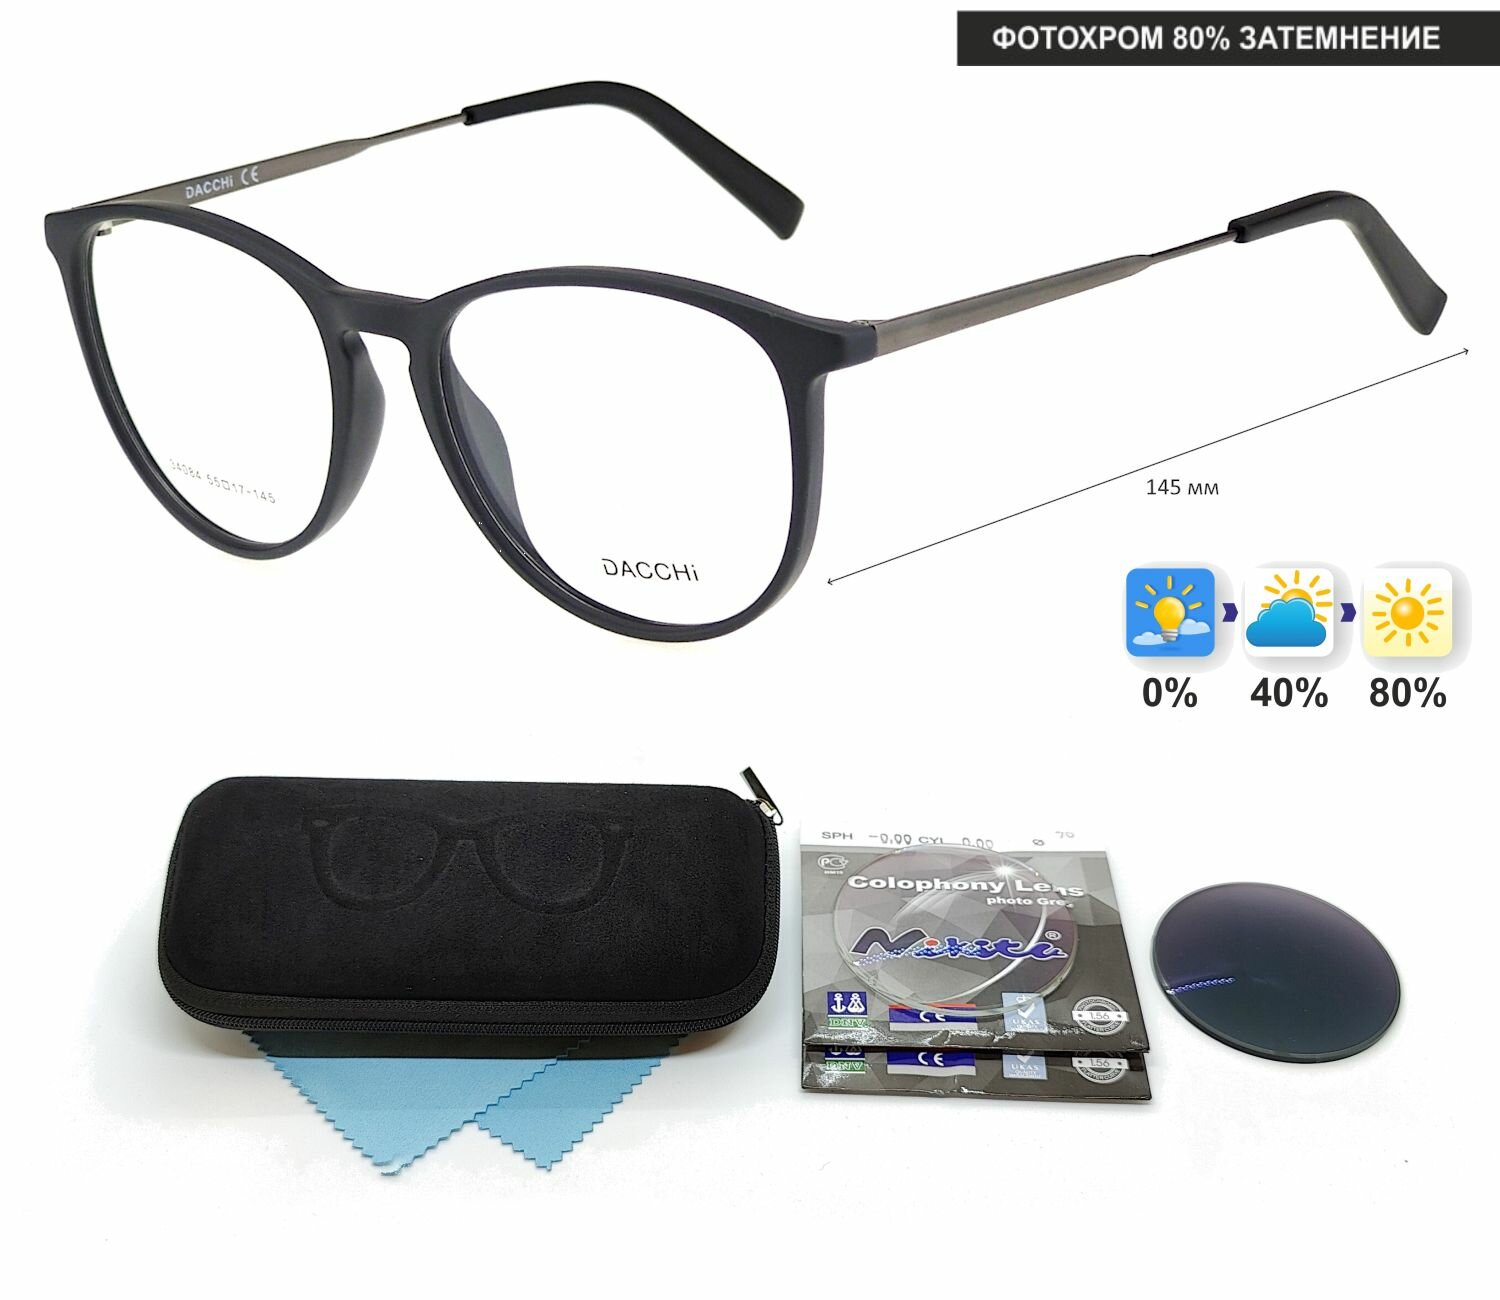 Фотохромные очки с футляром-змейка DACCHI мод. 34084 Цвет 3 с линзами NIKITA 1.56 Colophony GRAY, HMC+ -1.25 РЦ 66-68